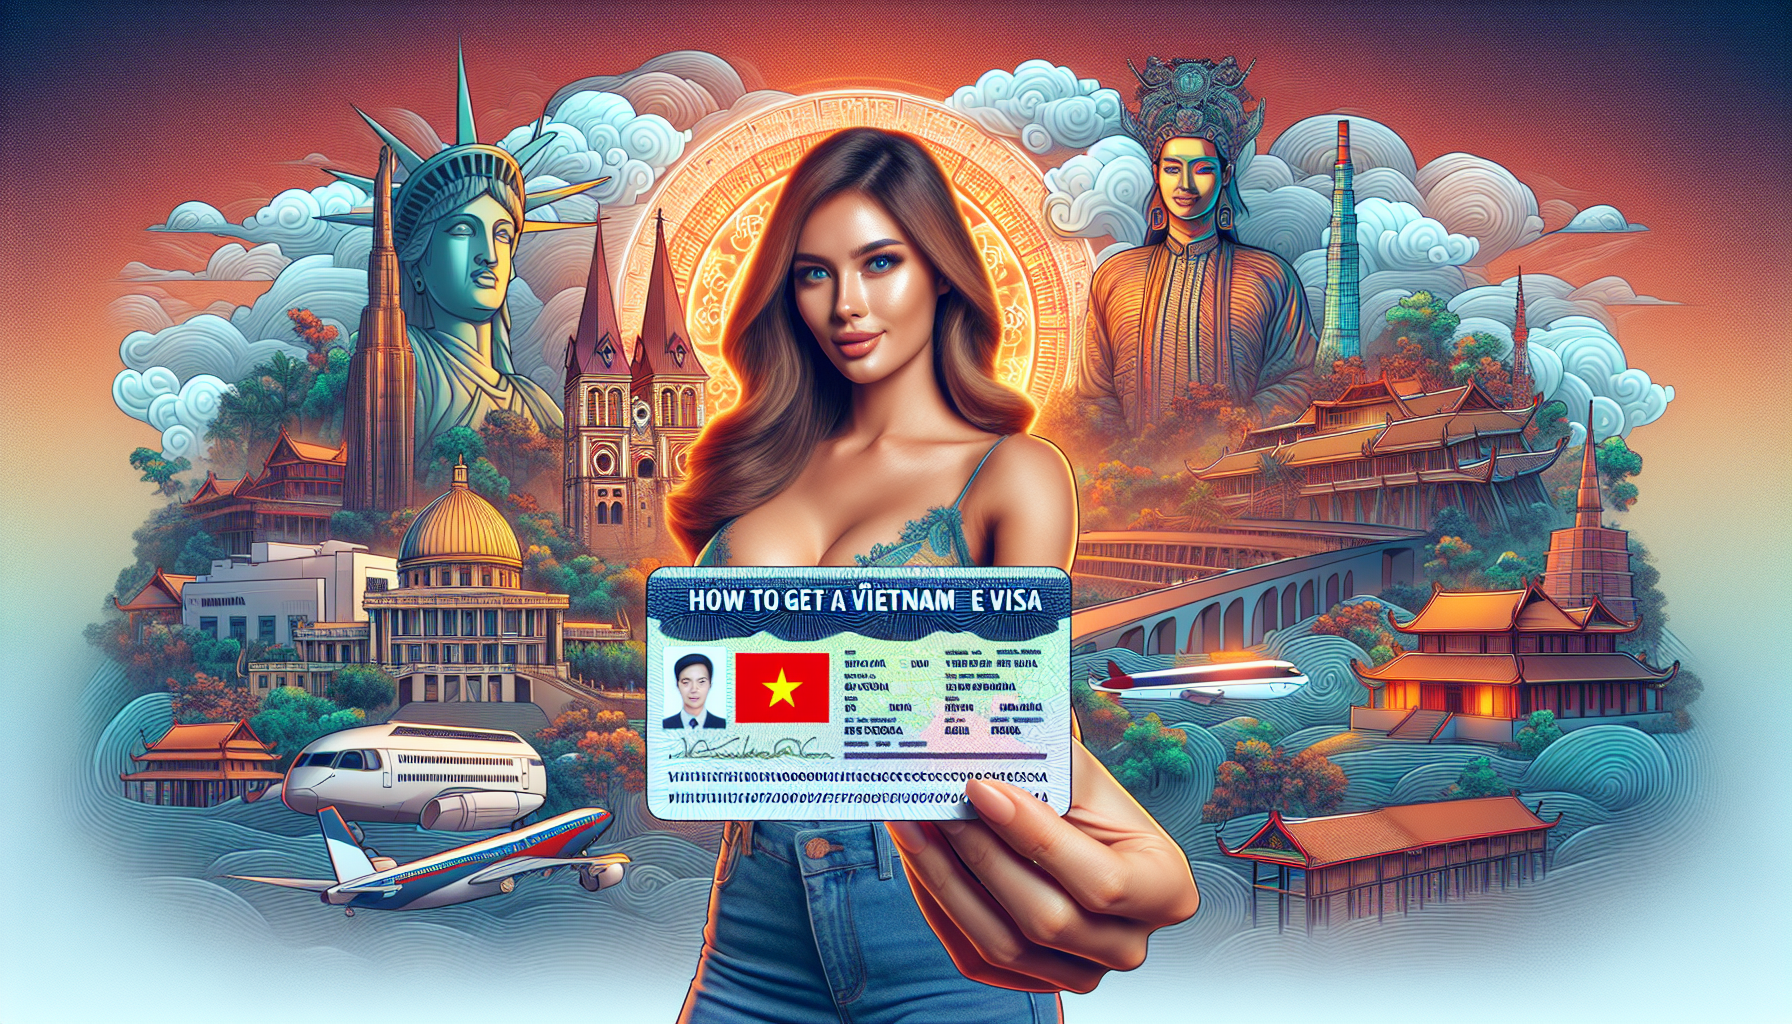 Vietnam Evisa for Citizens from Brazil